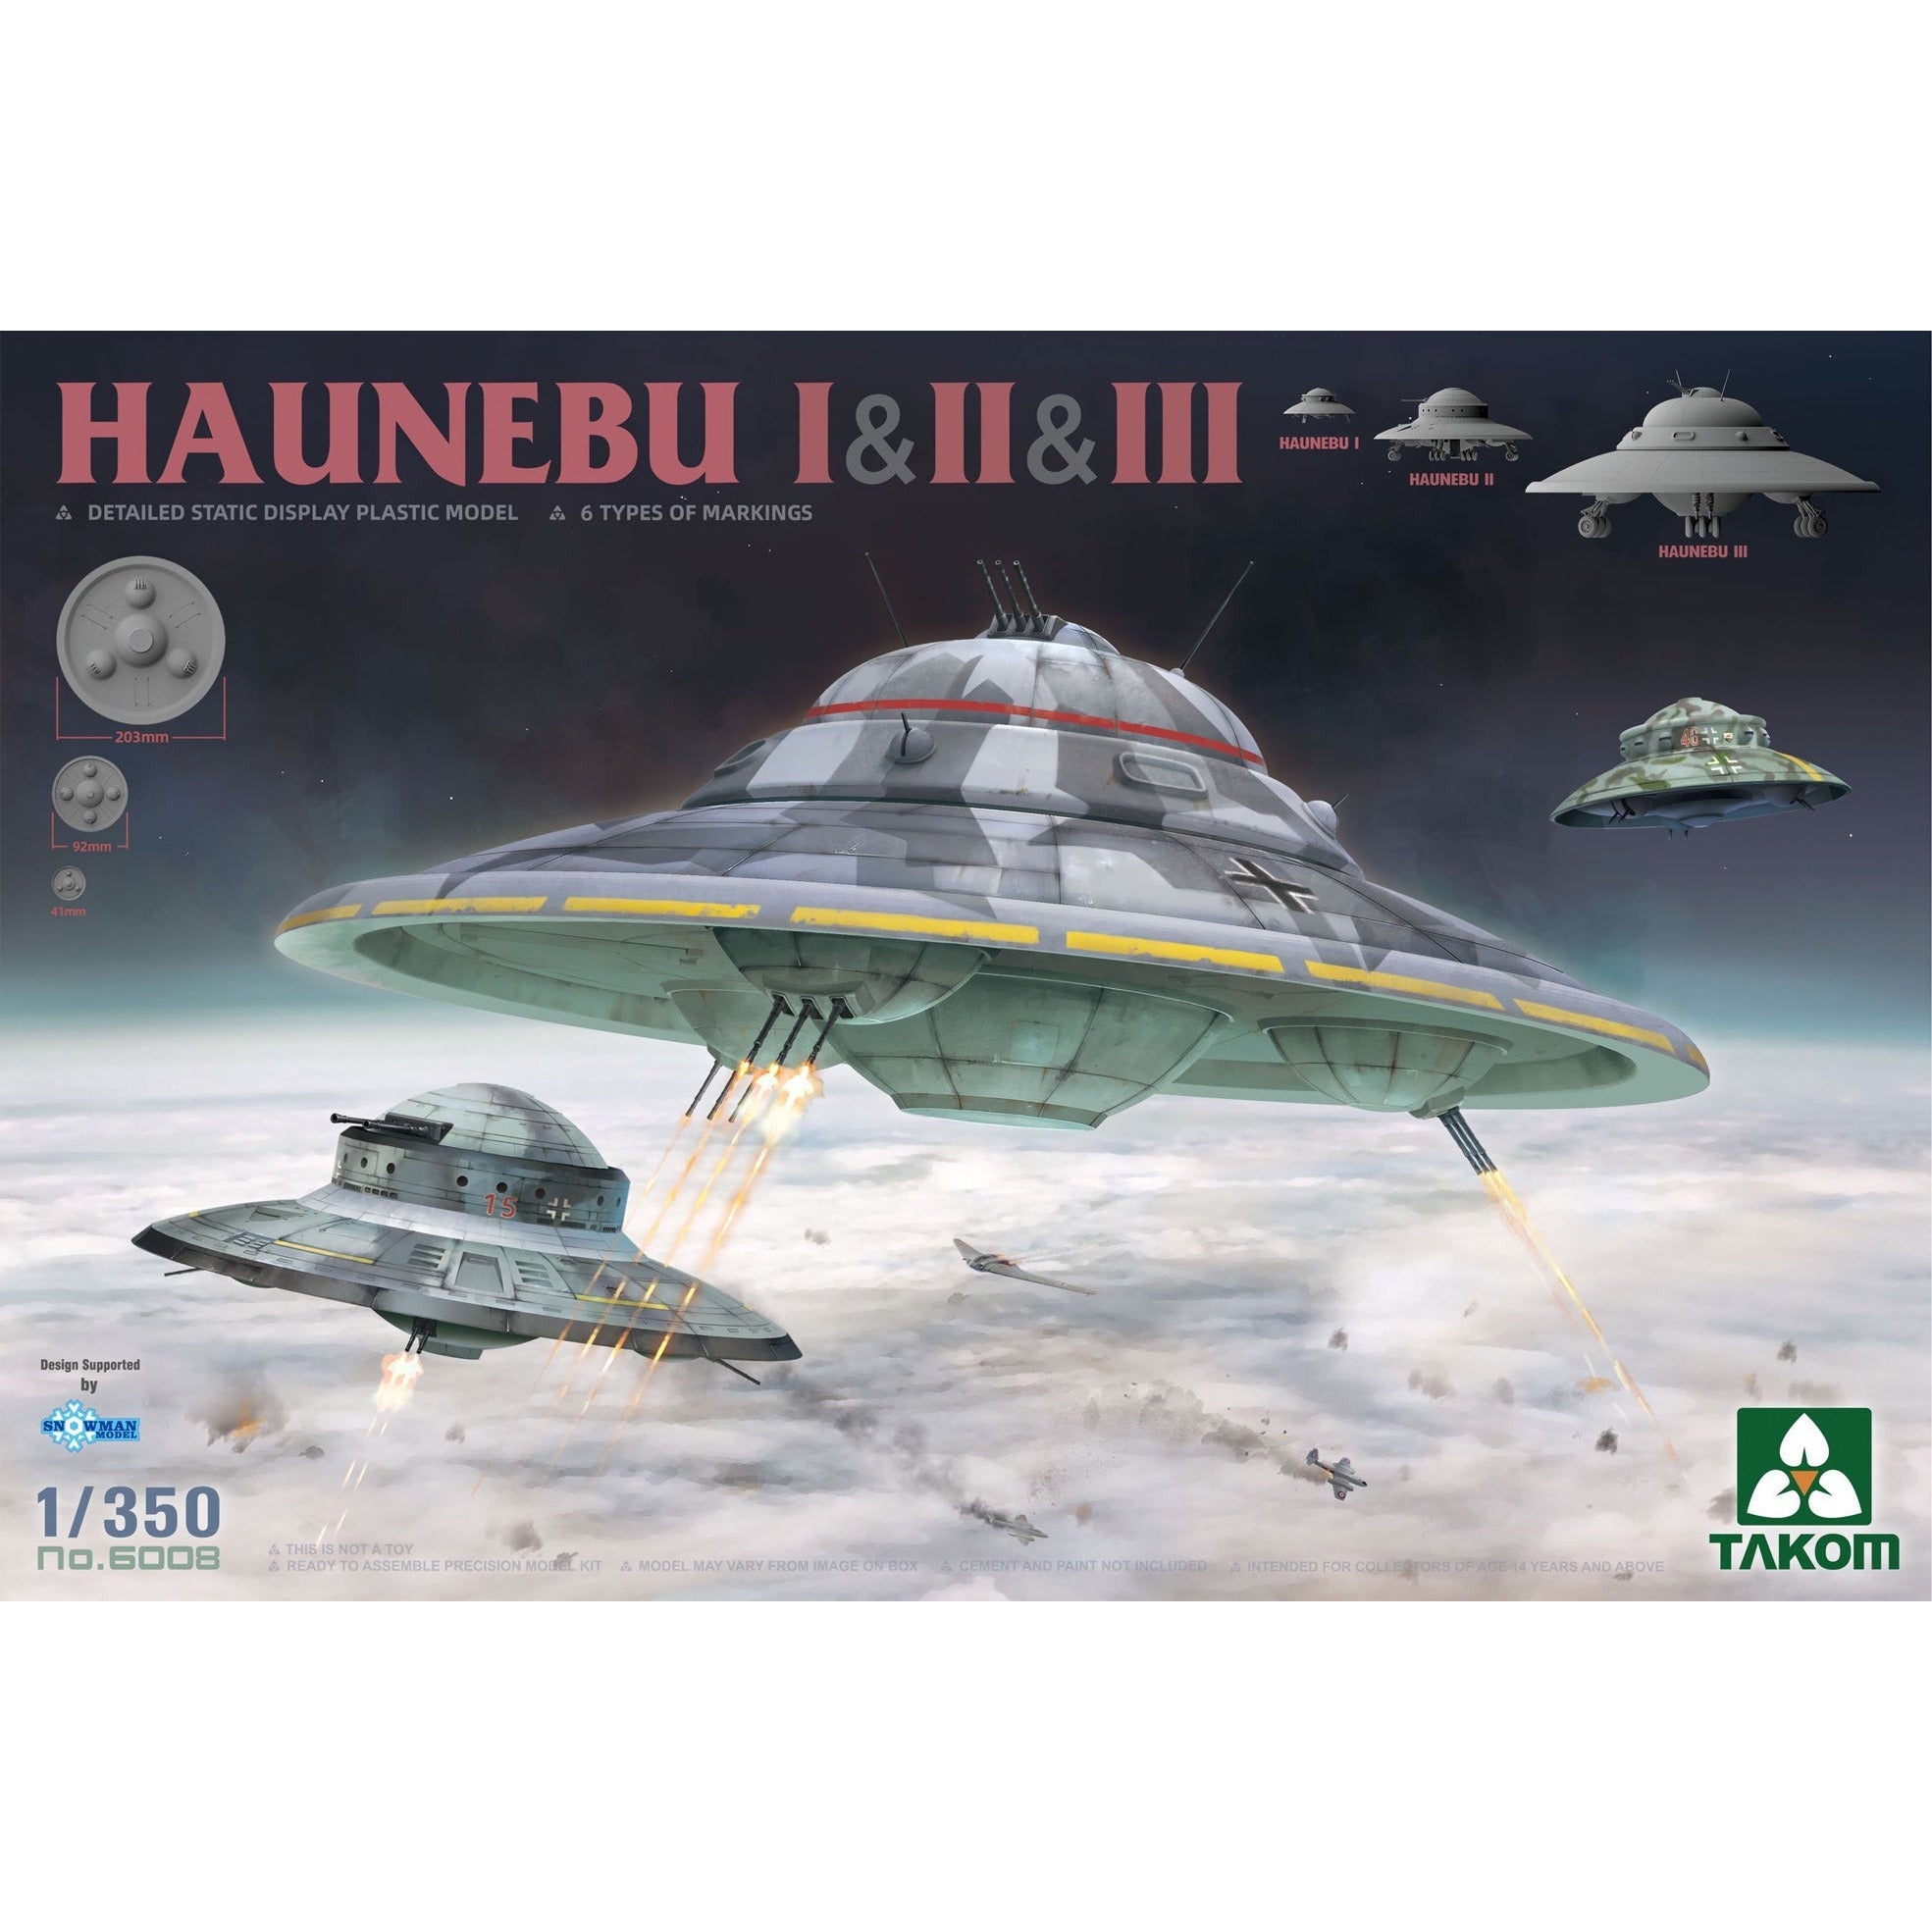 Haunebu  I, II, & III 1/350 Science Fiction Model Kit #6008 by Takom